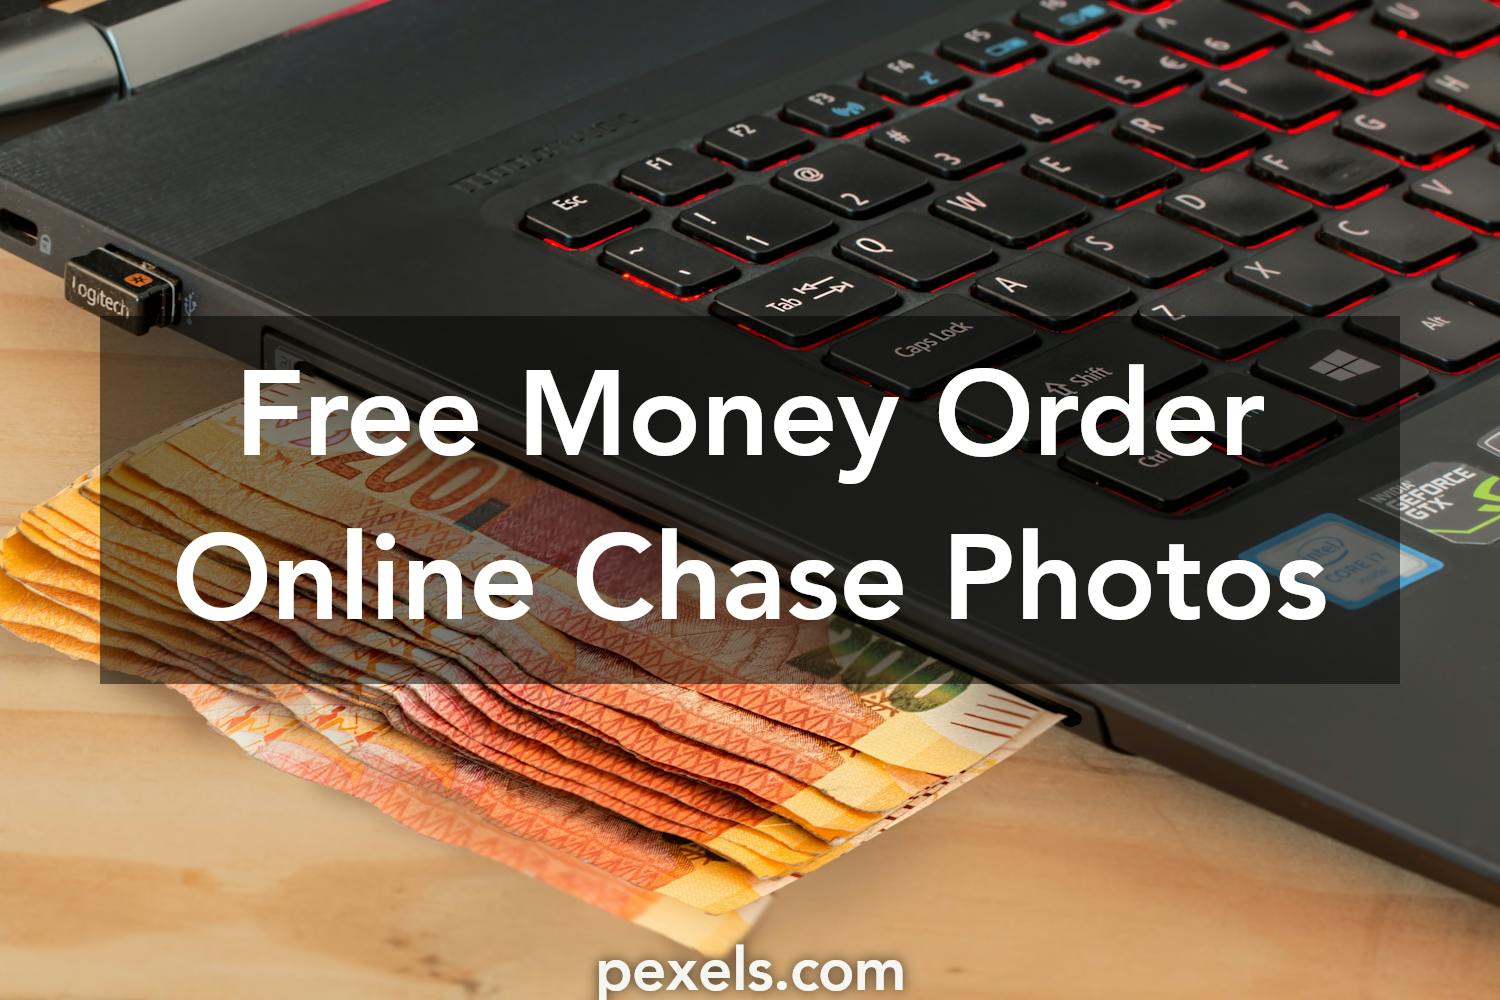 250 Great Money Order Online Chase Photos Pexels Free Stock Photos - 